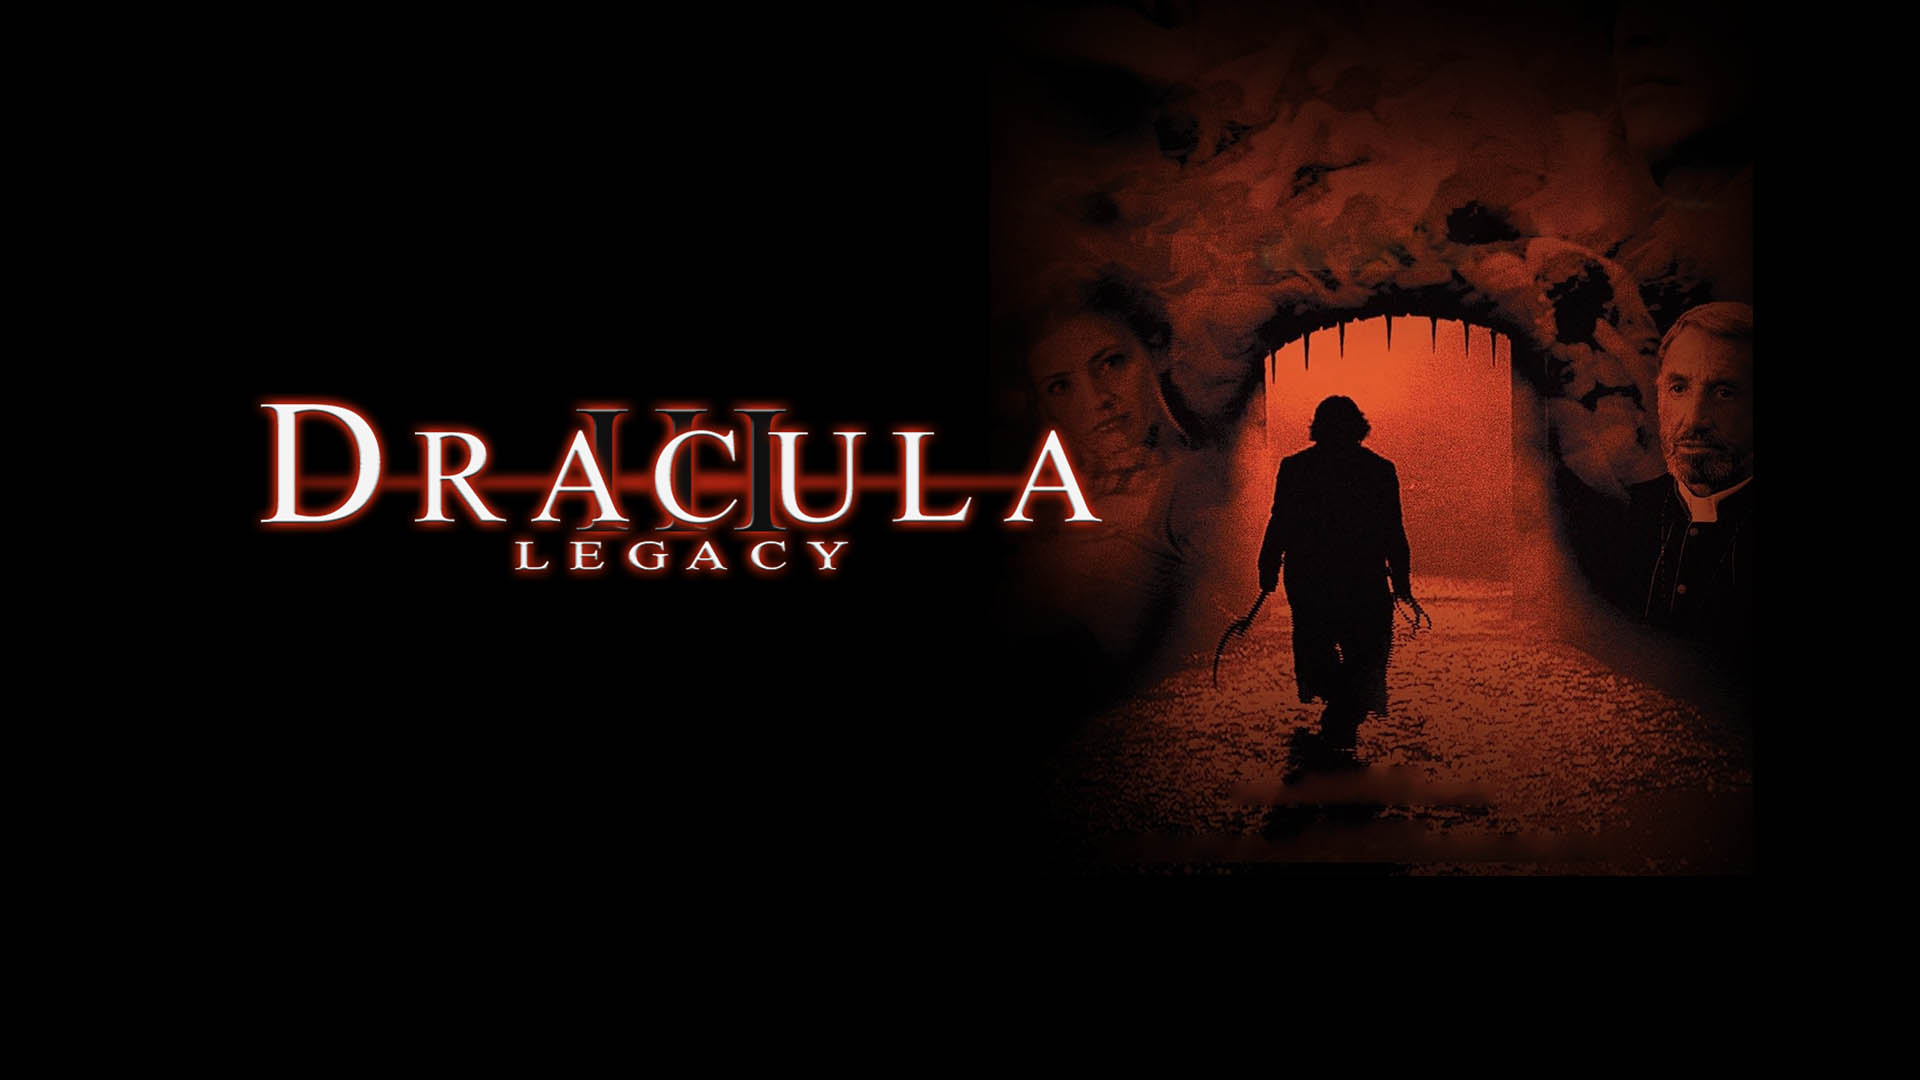 Watch Dracula III: Legacy Online | Stream Full Movies